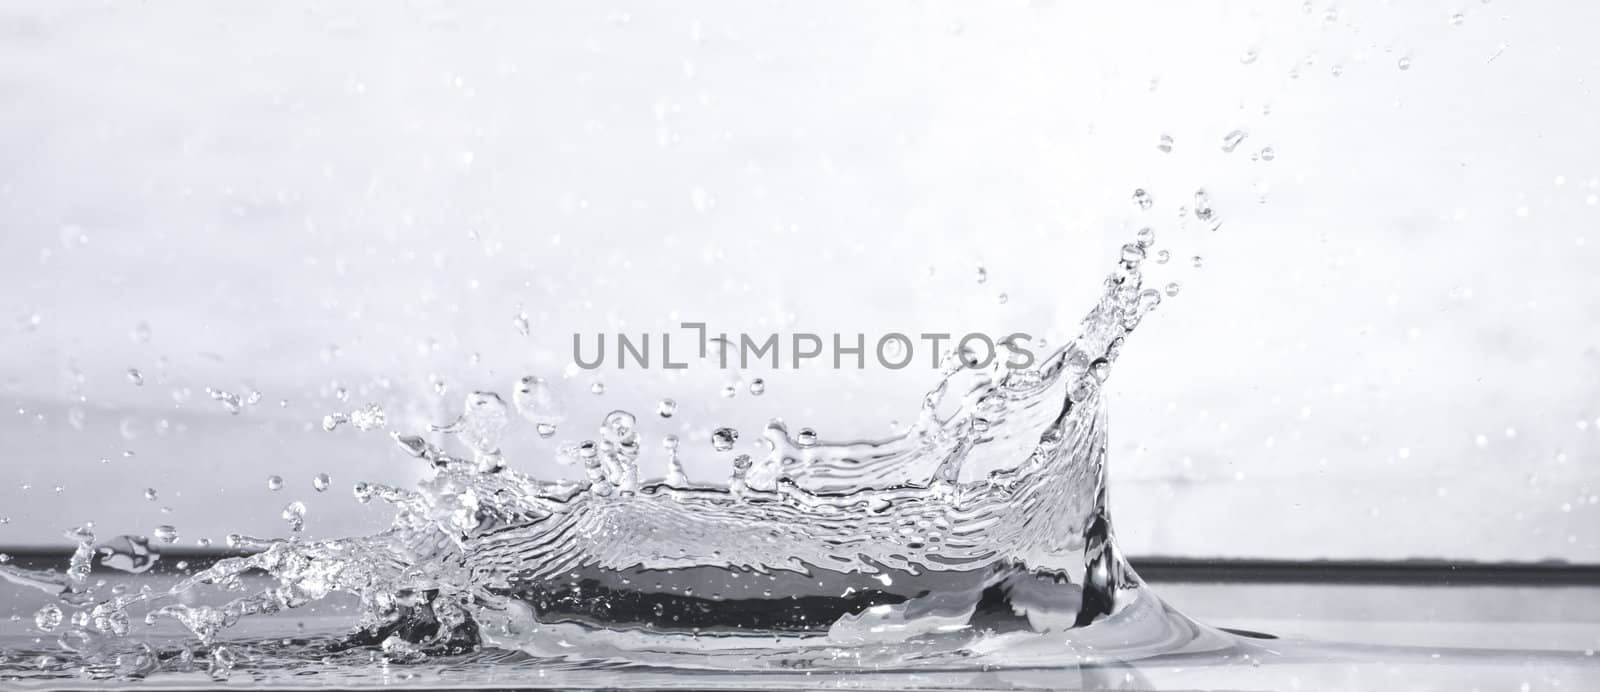 water splash by ozaiachin